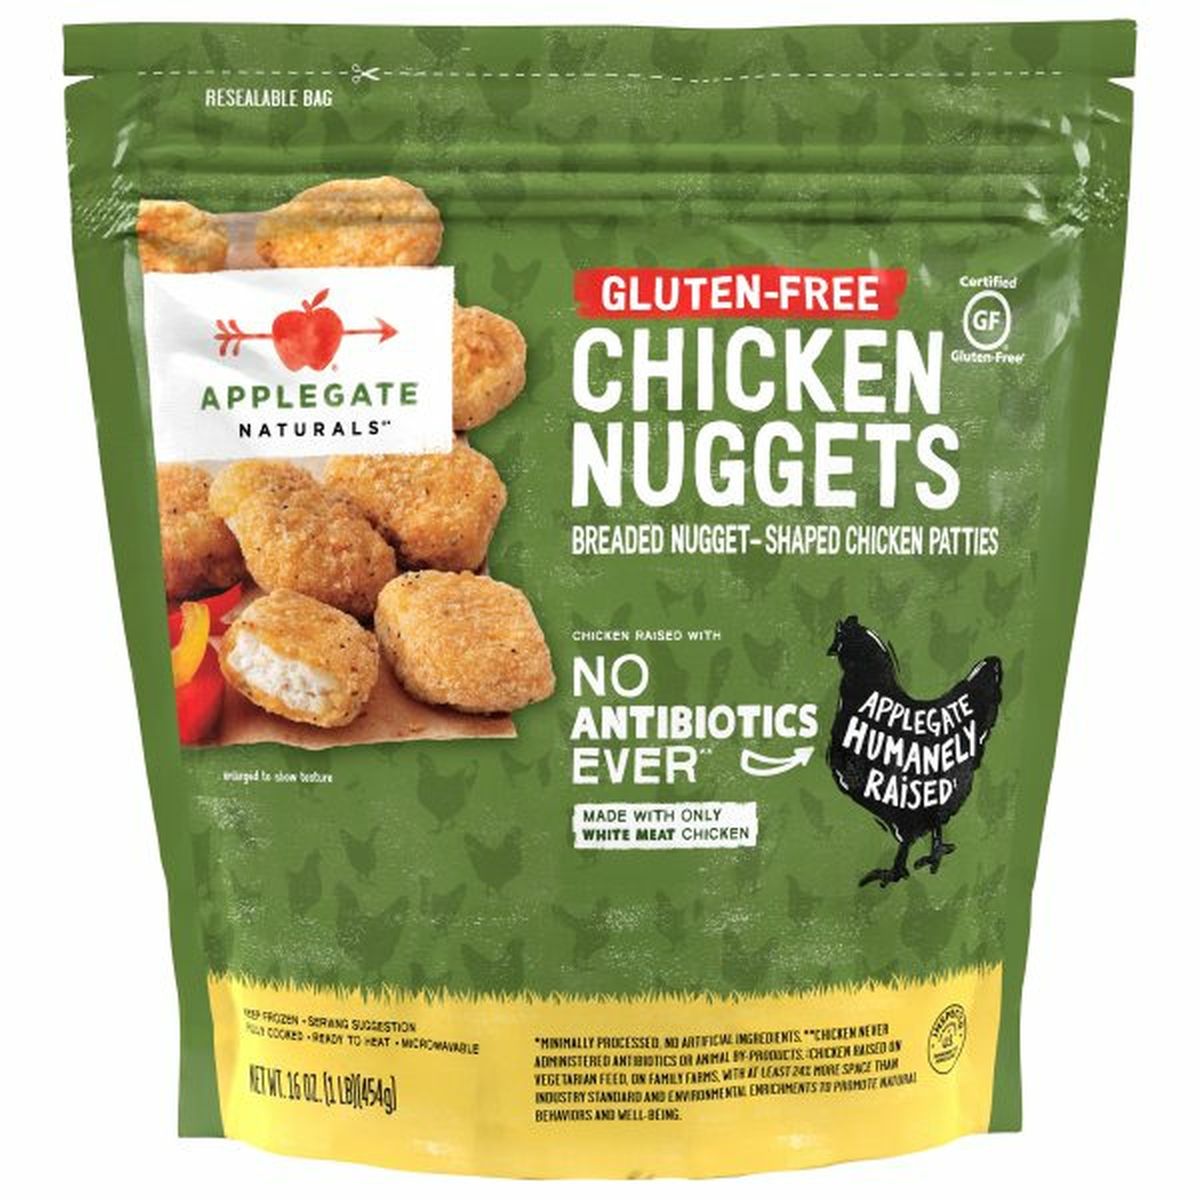 Calories in Applegate Chicken Nuggets, Gluten-Free, Breaded